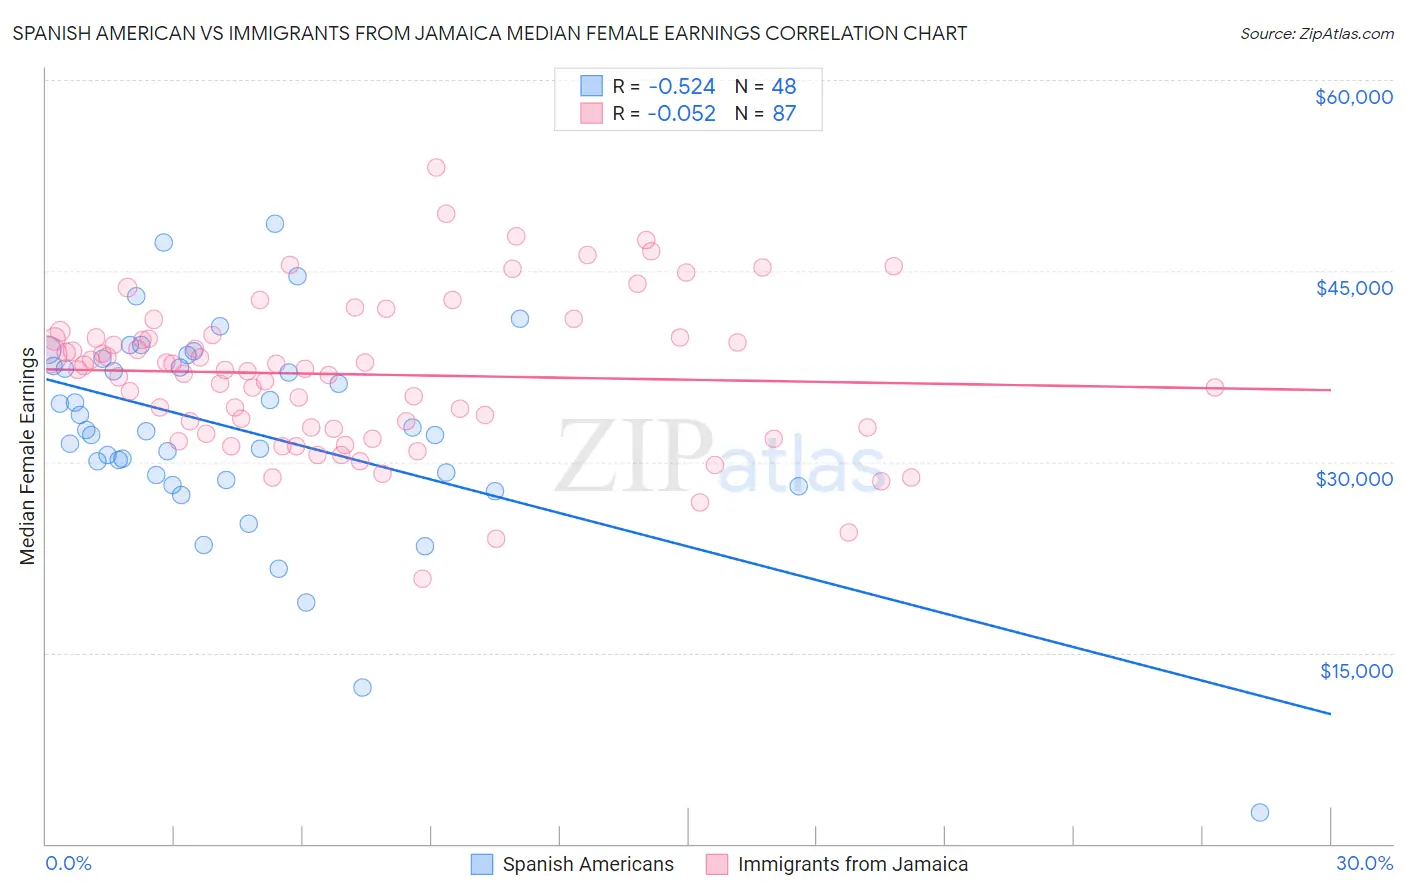 Spanish American vs Immigrants from Jamaica Median Female Earnings